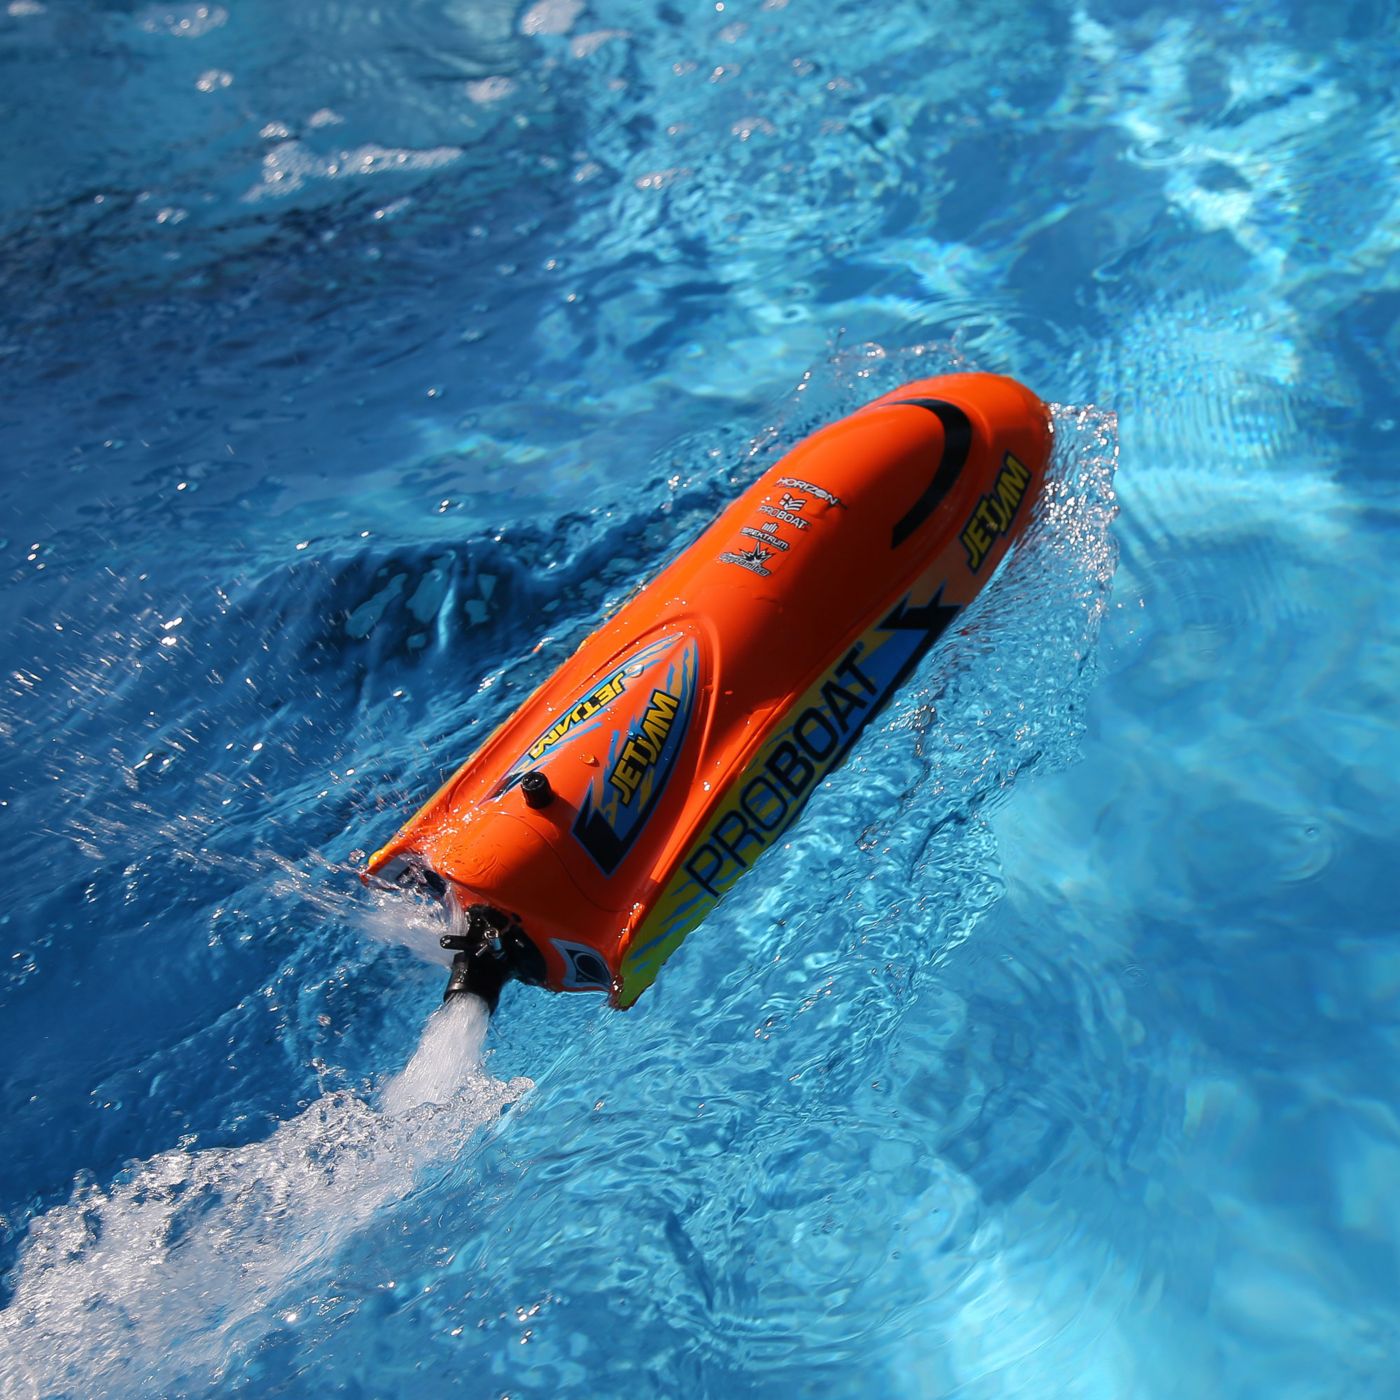 Proboat Jet Jam 12" Pool Racer Orange RTR (versie 2.0)!